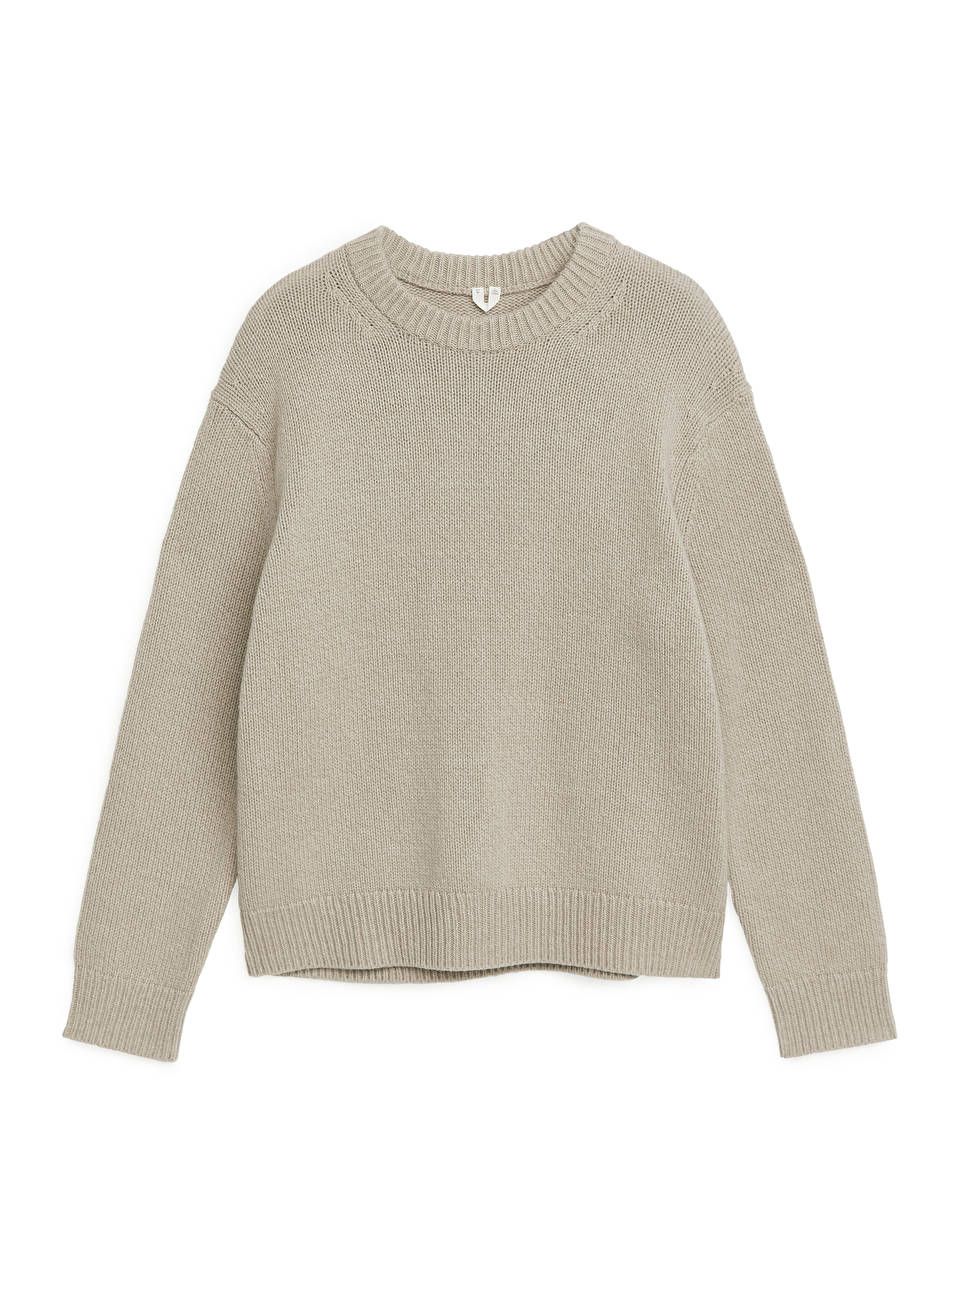 Pullover aus schwerem Wollstrick | ARKET (DE)